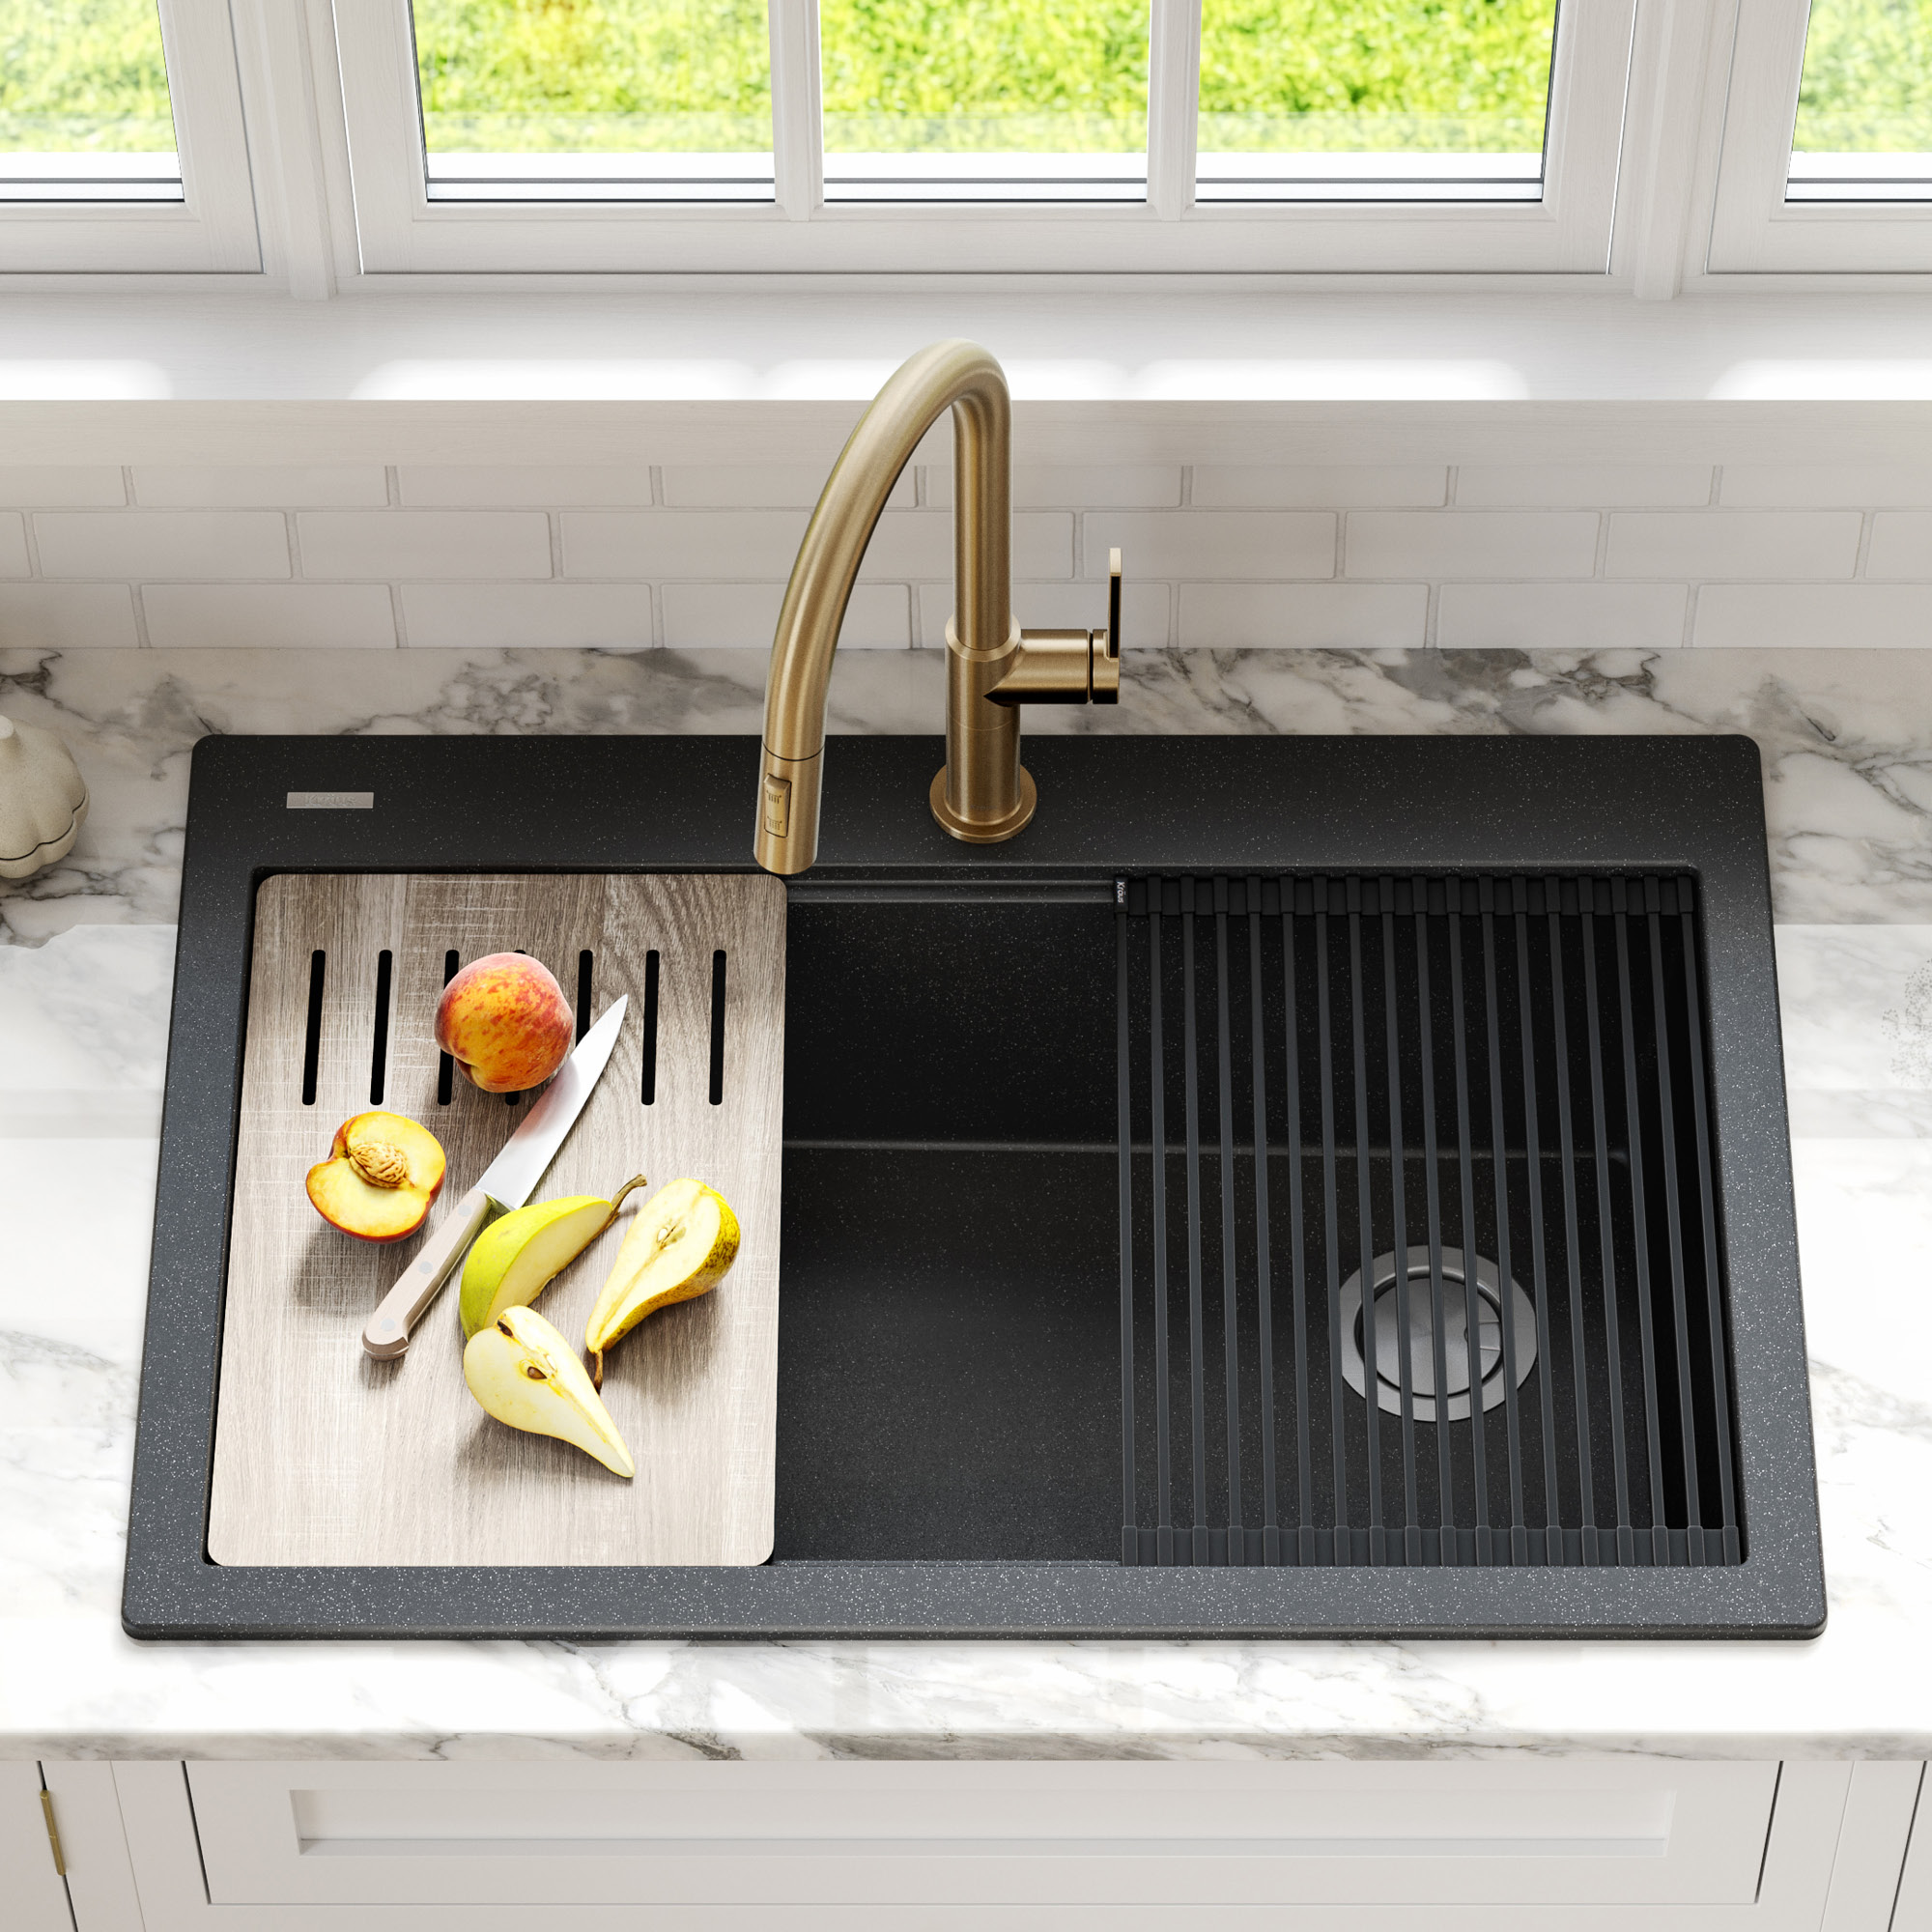 Kraus Bellucci Workstation 33 inch Drop-In Granite Composite Single Bowl Kitchen Sink in Metallic Black with Accessories - image 2 of 14